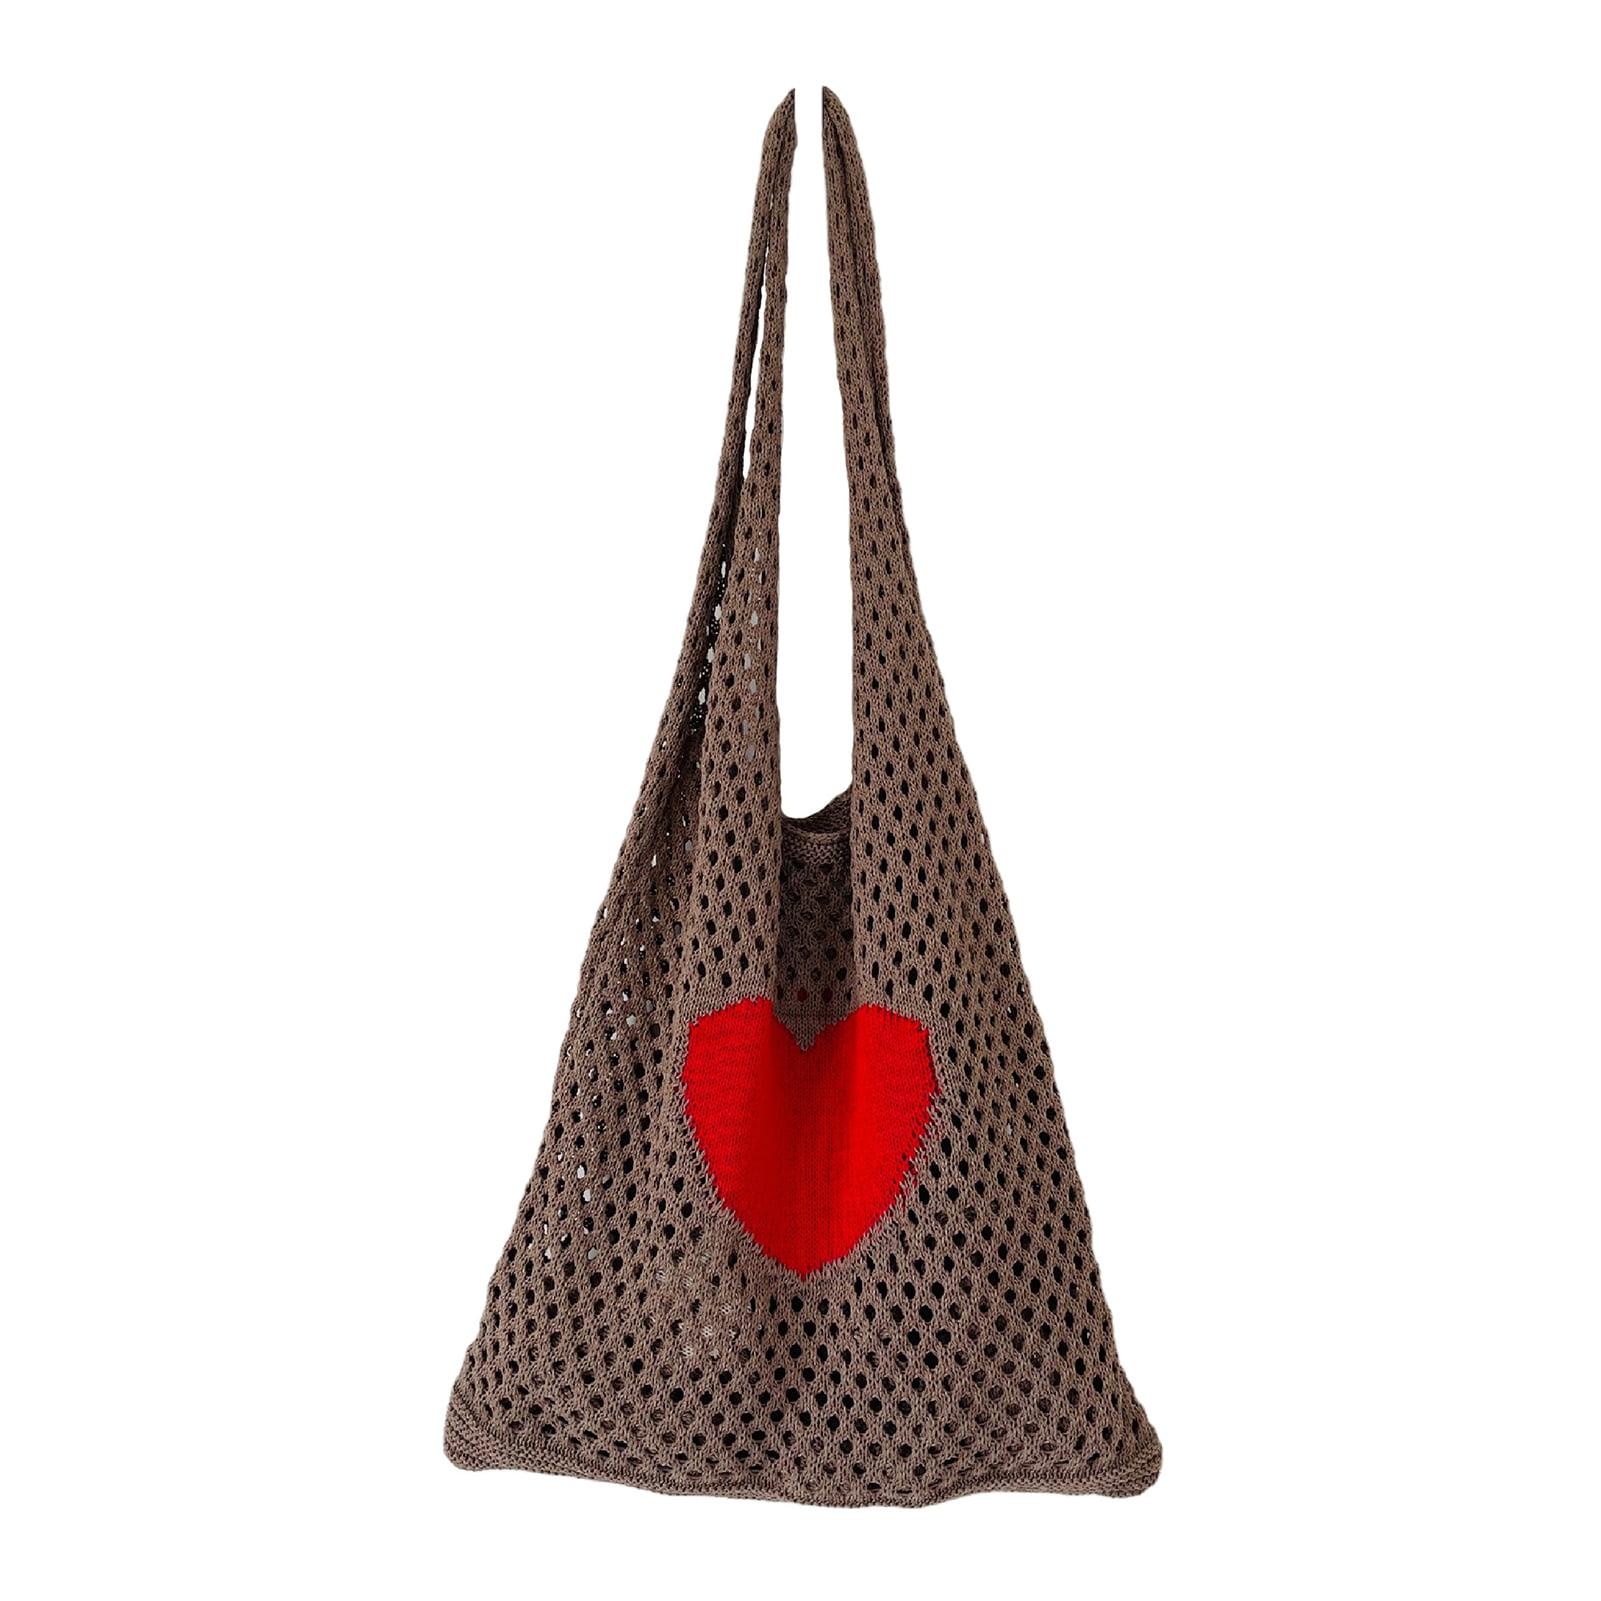 Mightlink Women Shoulder Bag Crochet Heart Pattern Large Capacity Vintage Hollow Out Handbag Tote Bag for Outdoor, Women's, Beige